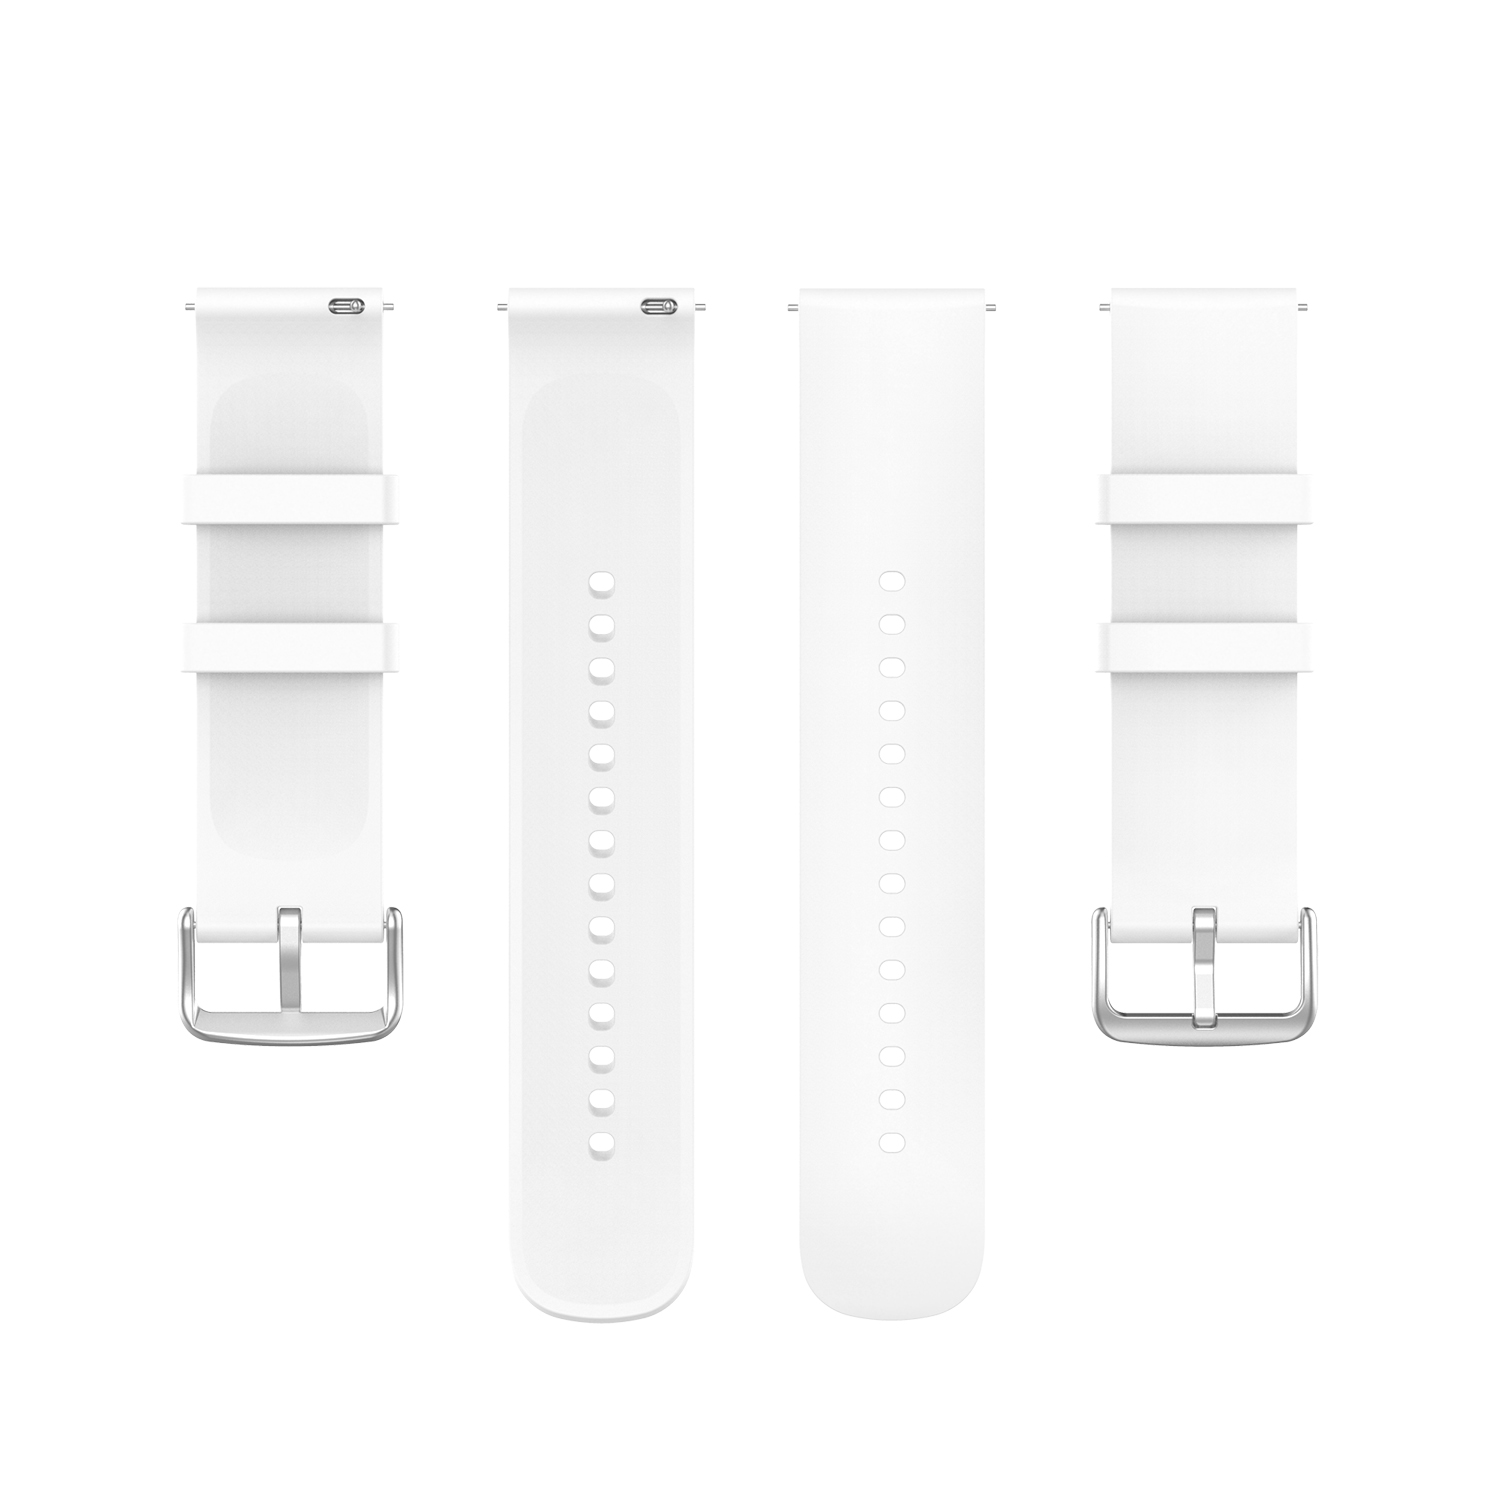 Dây Silicon Simple cho Galaxy Watch 6 / Watch 4,6 Classic / Garmin Vivo Venu / Galaxy Watch 5 / Ticwatch Pro / Huawei Watch GT 4 (Size 20mm/22mm) - Hàng Nhập Khẩu